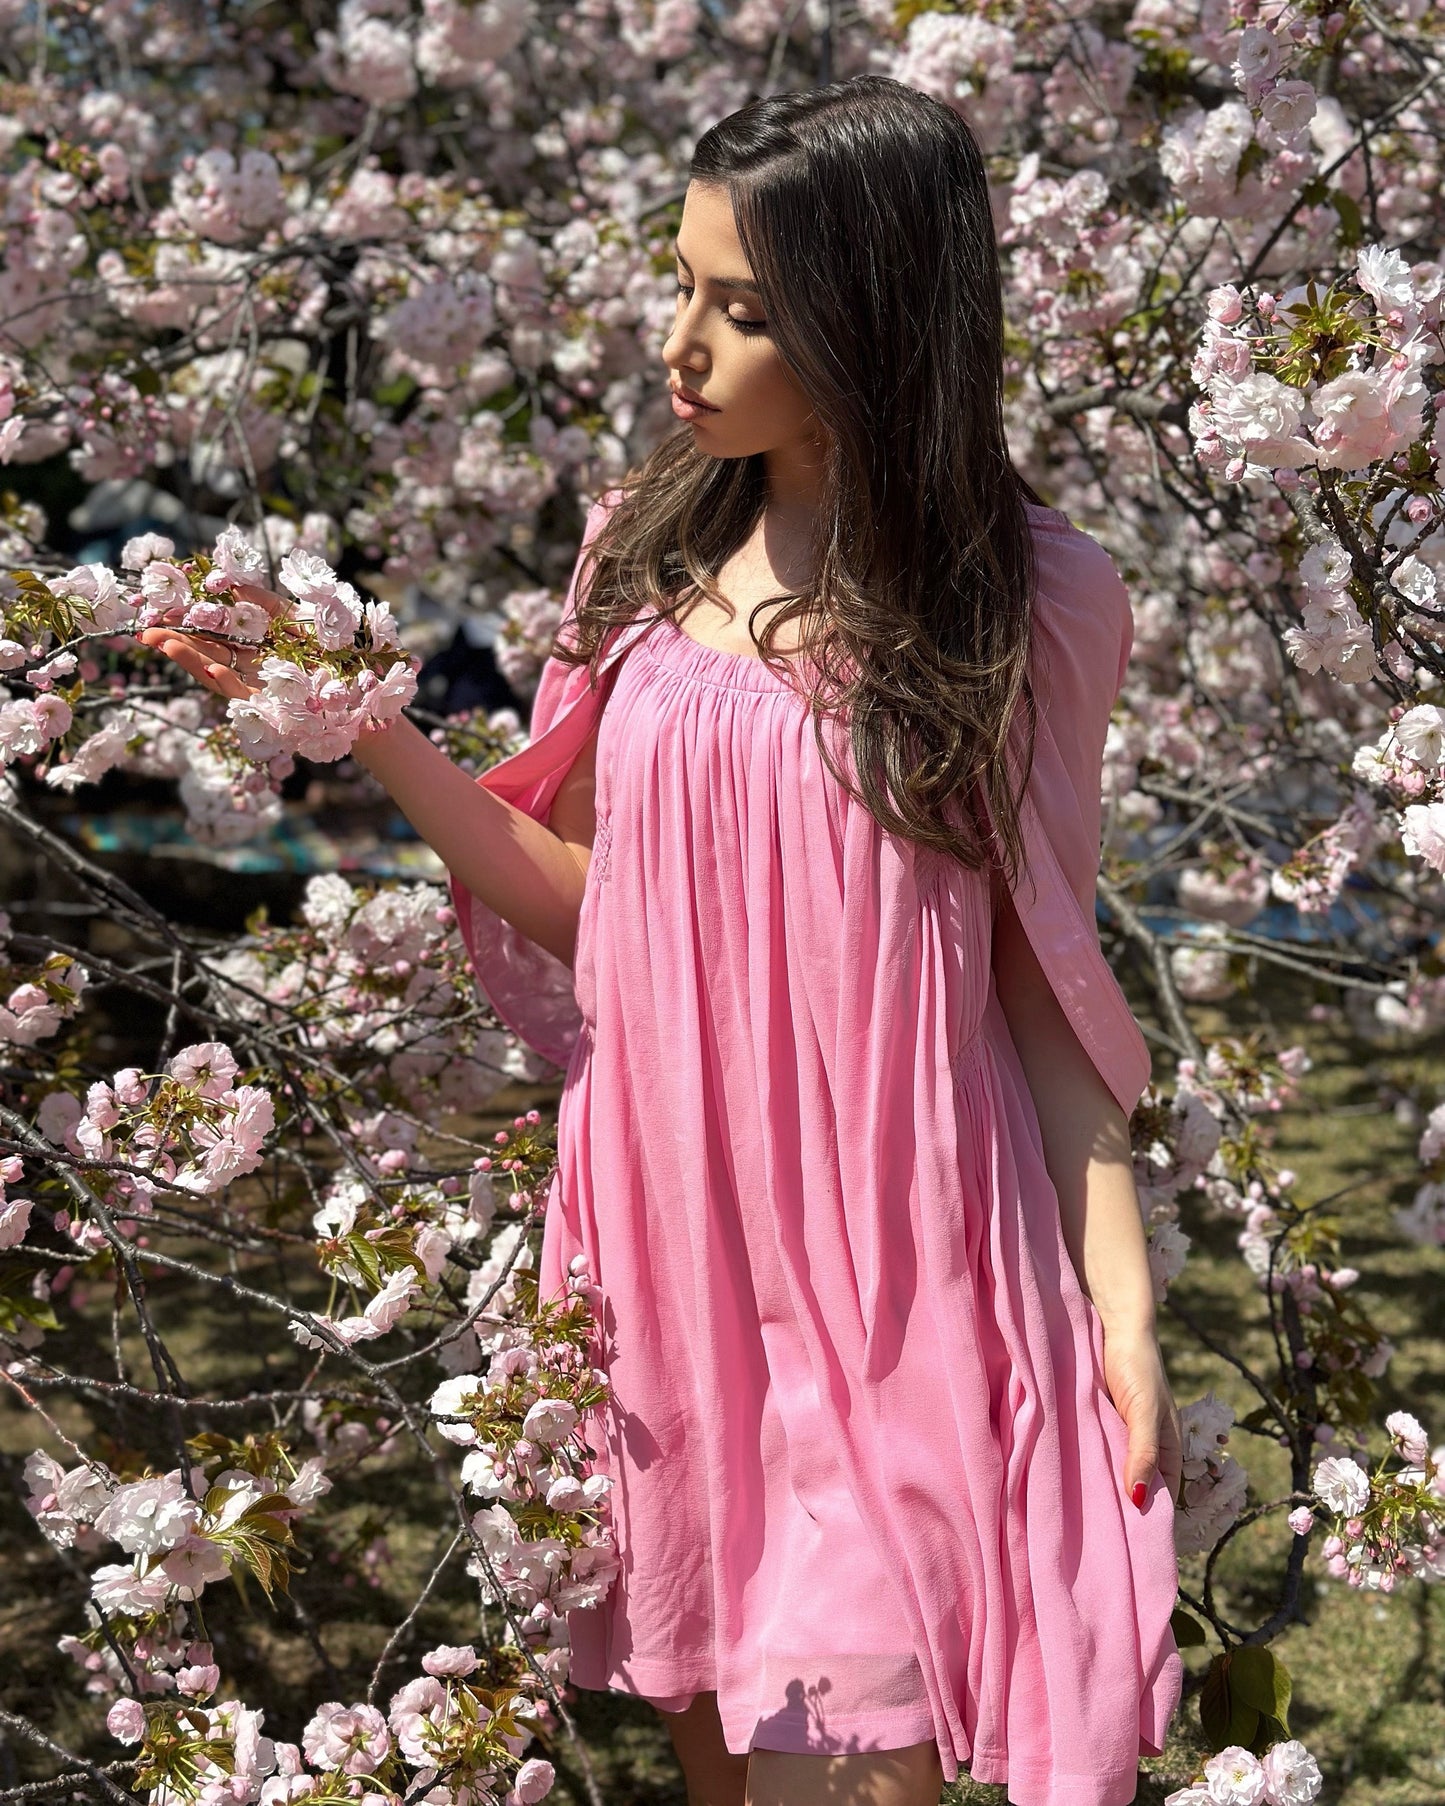 CHLOÈ - Dress pink silk NEW size 40 FR